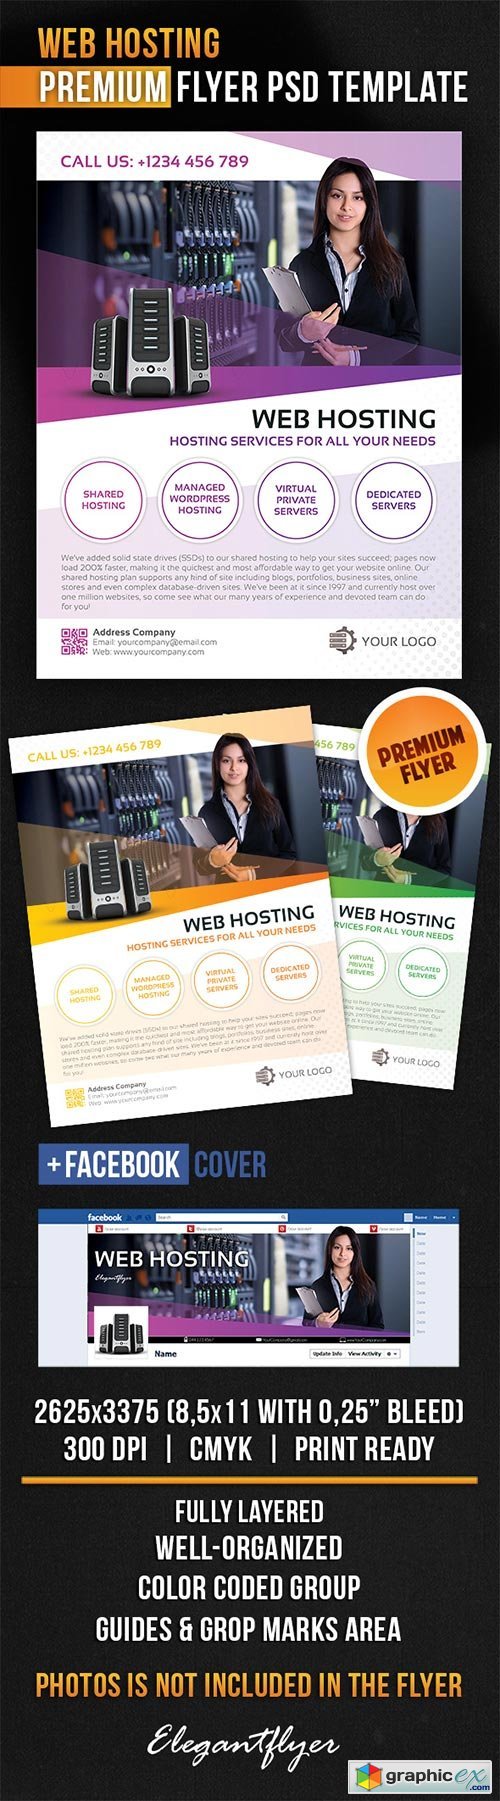 Web Hosting Flyer PSD Template + Facebook Cover